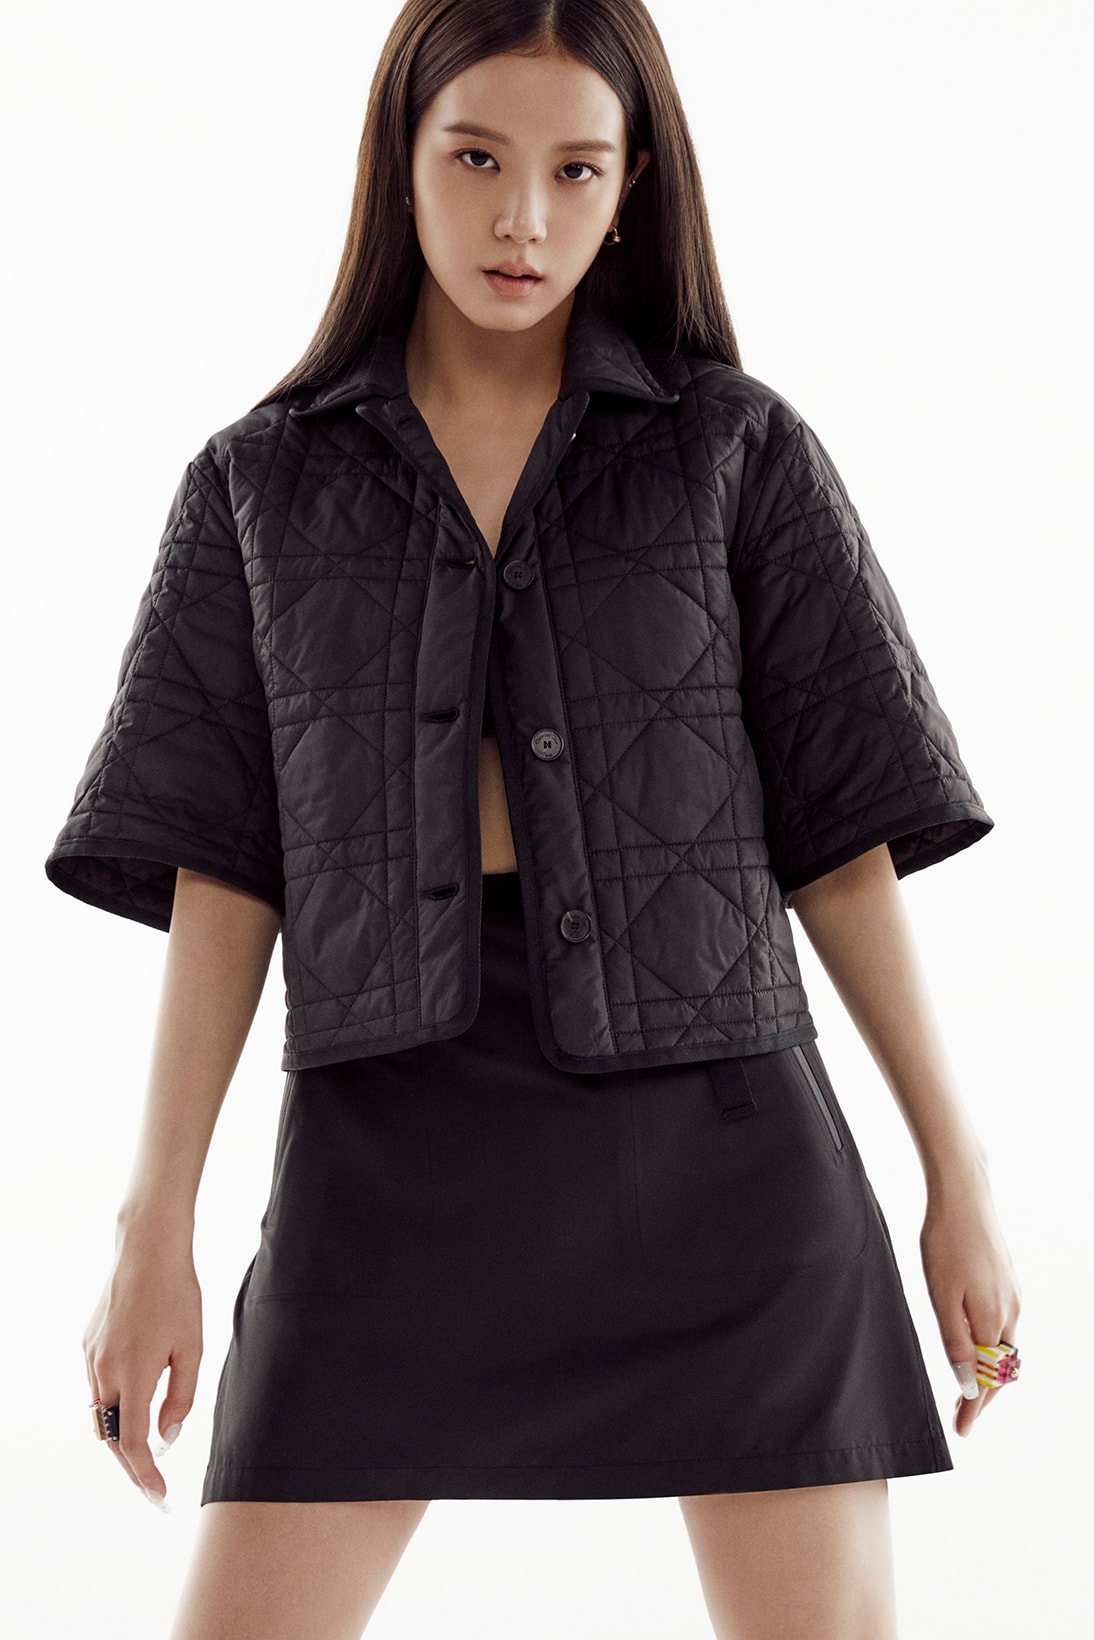 BLACKPINK Jisoo Dior SS22 Spring Summer 2022 Collection Top Skirt